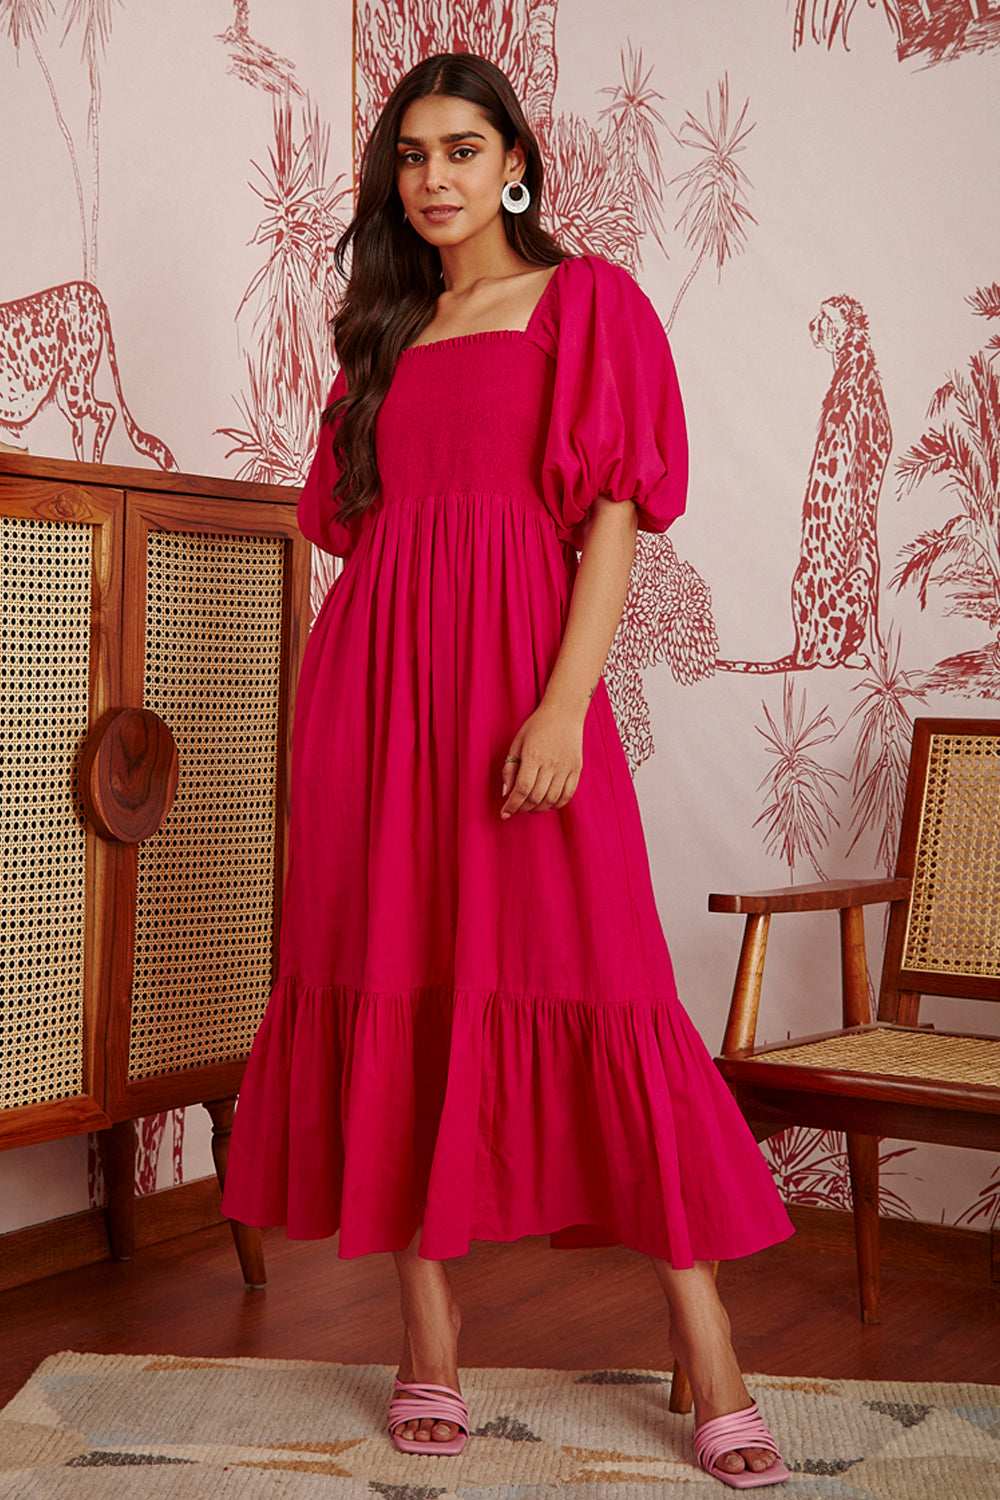 Zara Bright Pink Tier Dress – The Mama Project